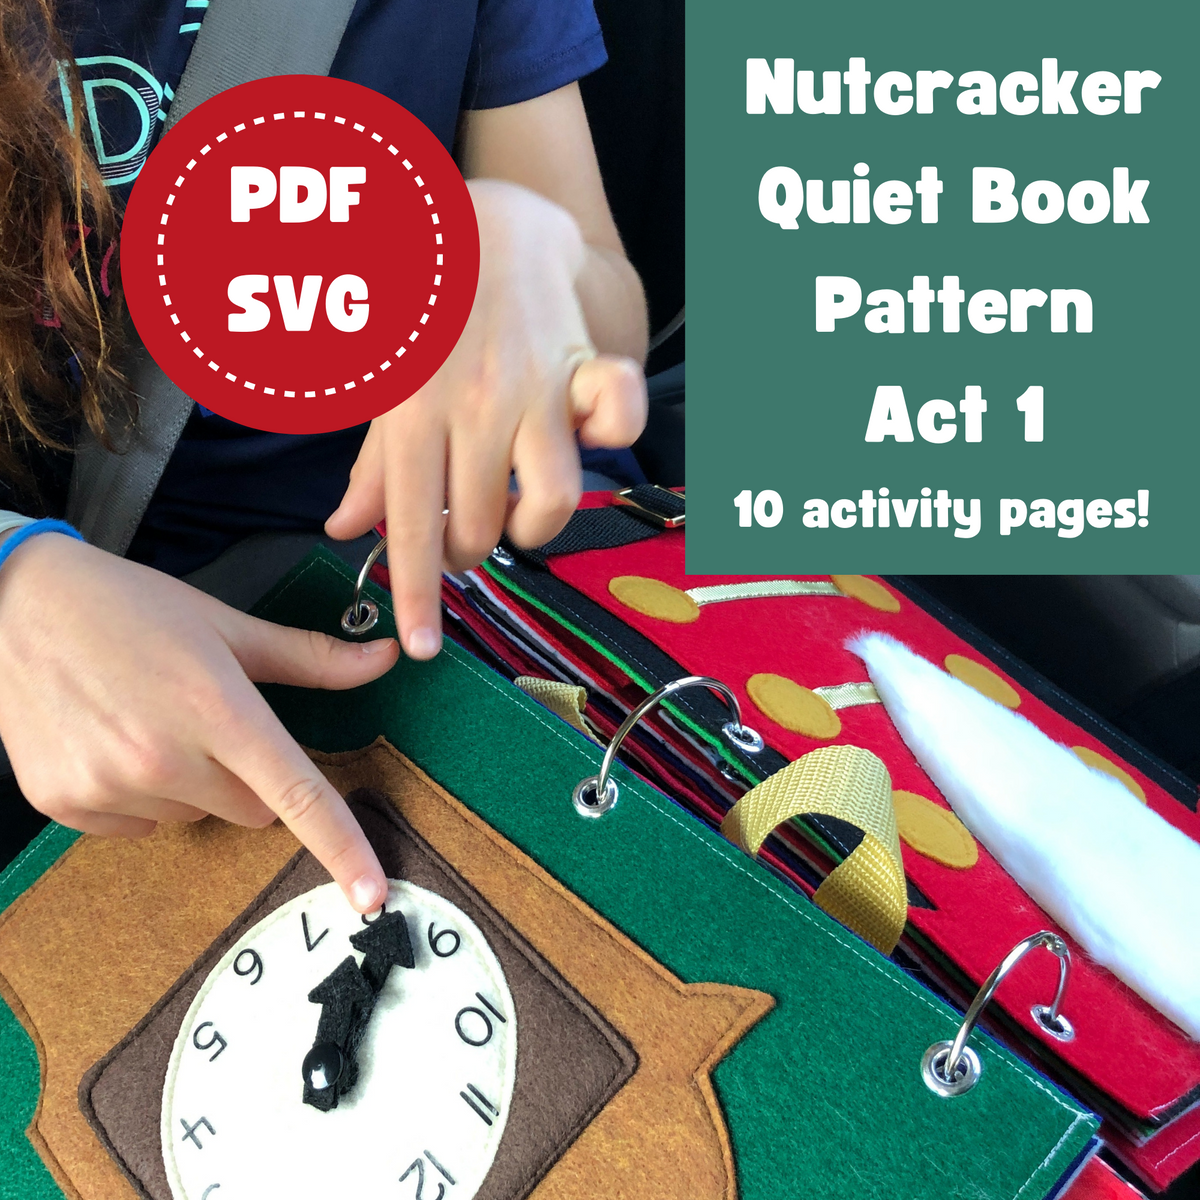 Nutcracker Act 1 Quiet Book Template and Instructions Bundle